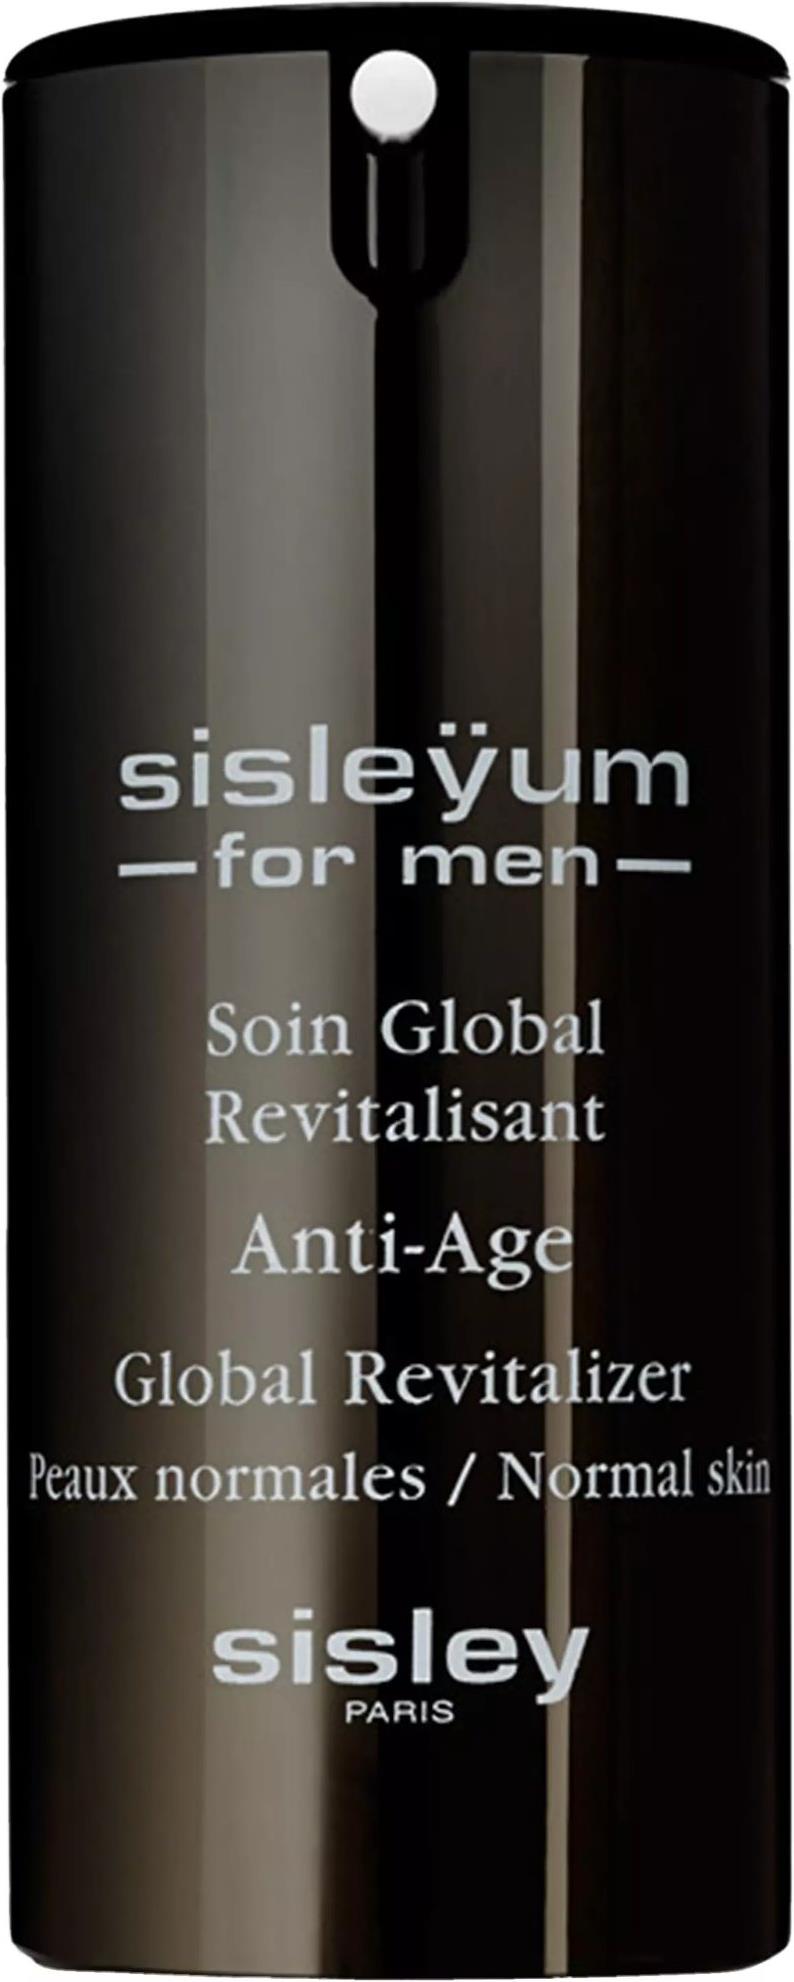 Sisley Sisleÿum for men (50 ml Gesichtscrème) kaufen